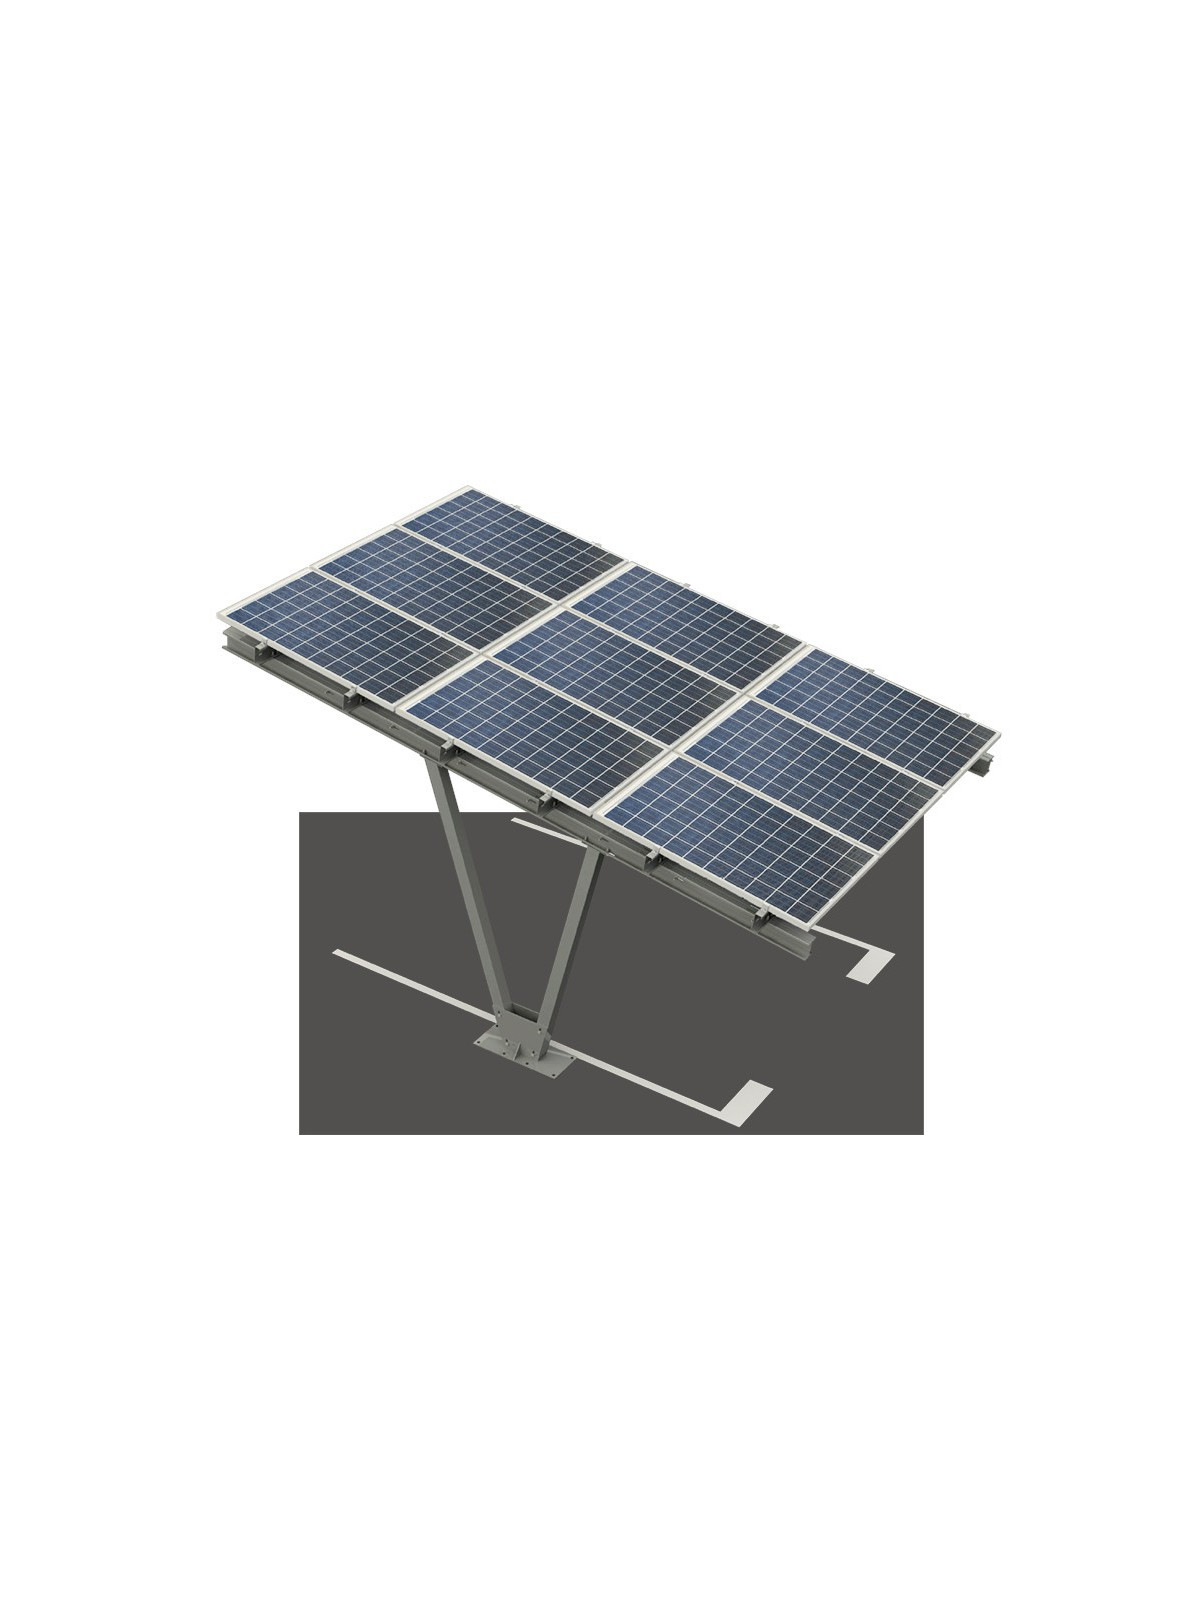 Simple photovoltaic carport